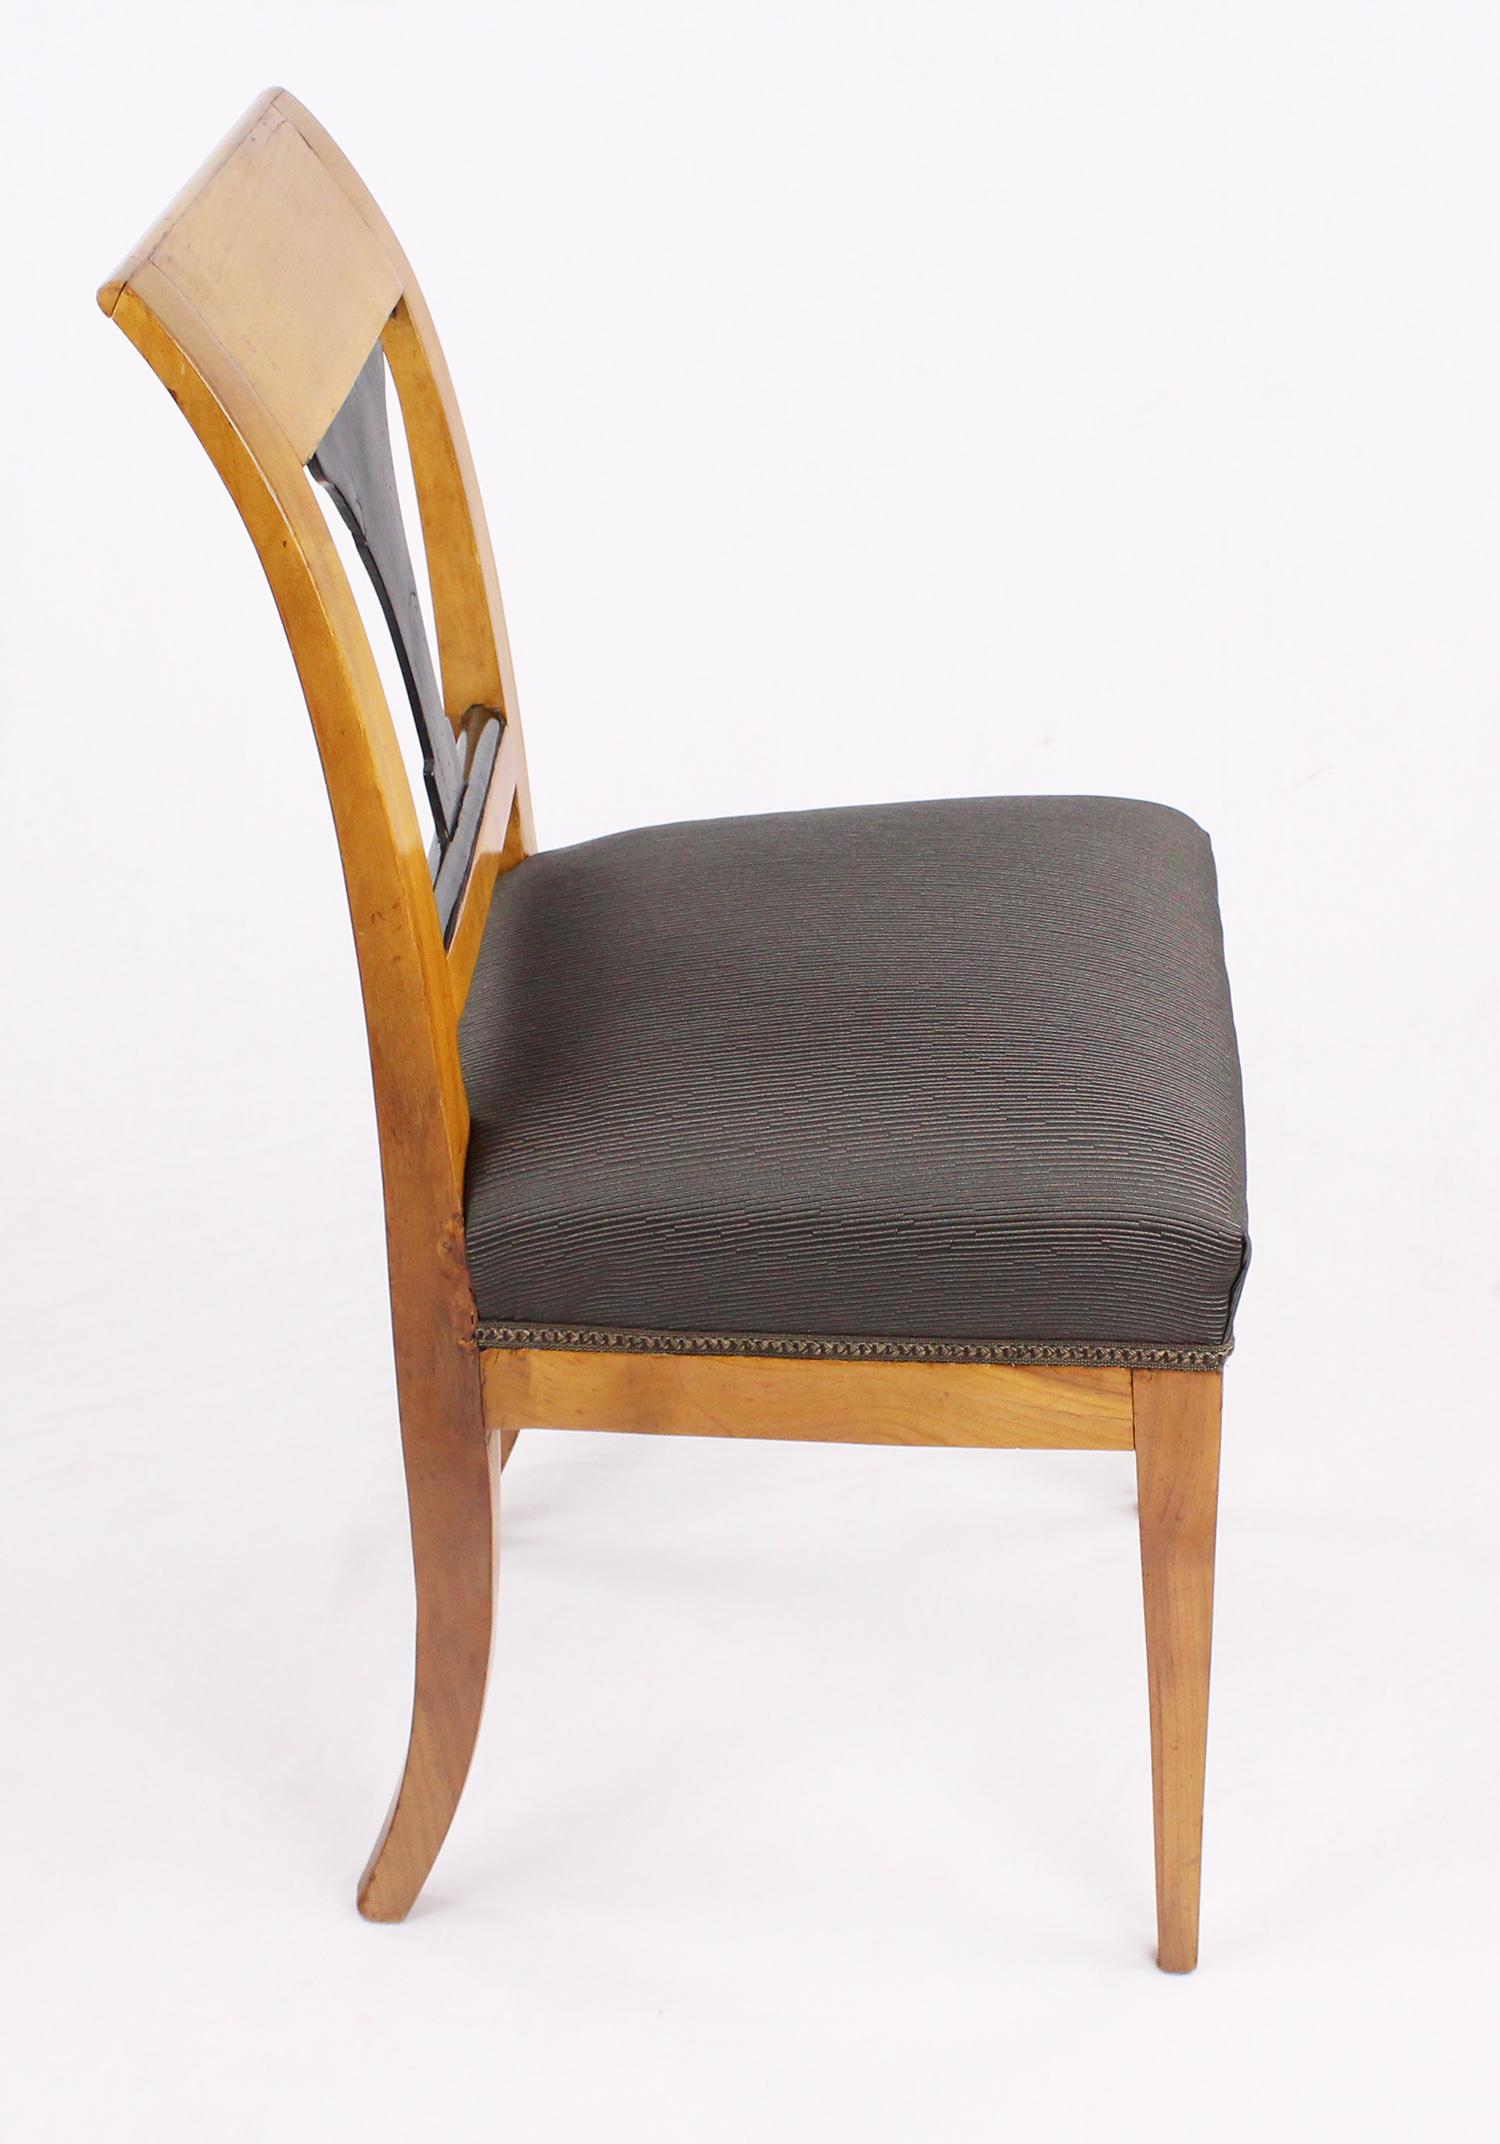 Early 19th Century 19th Century Biedermeier Period Chair, Cherrywood, circa 1820 For Sale